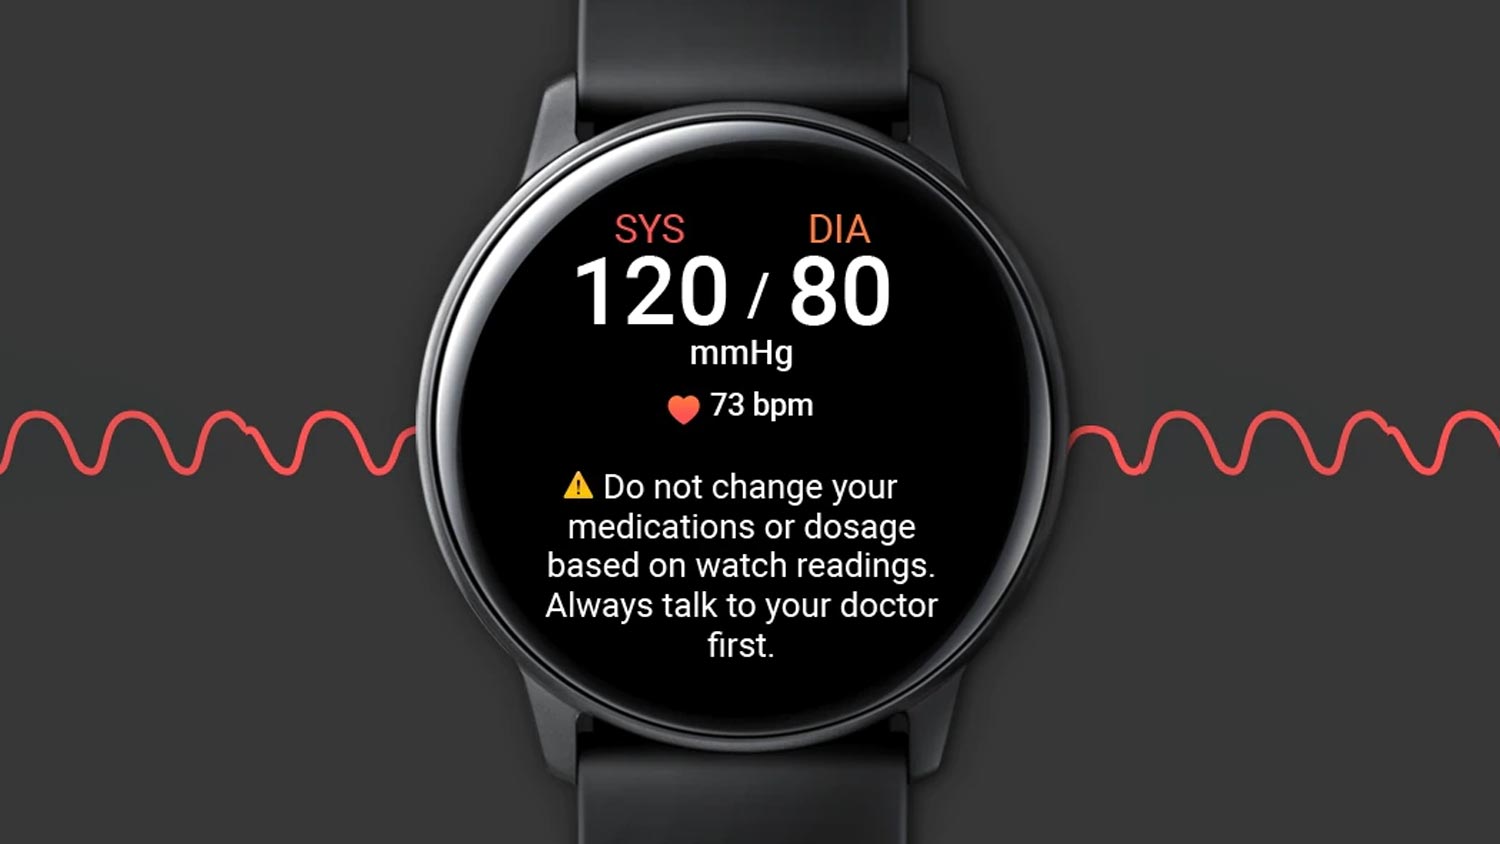 Aplikasi Mengesan Tekanan Darah Samsung Galaxy Watch Menerima Kelulusan Di Malaysia